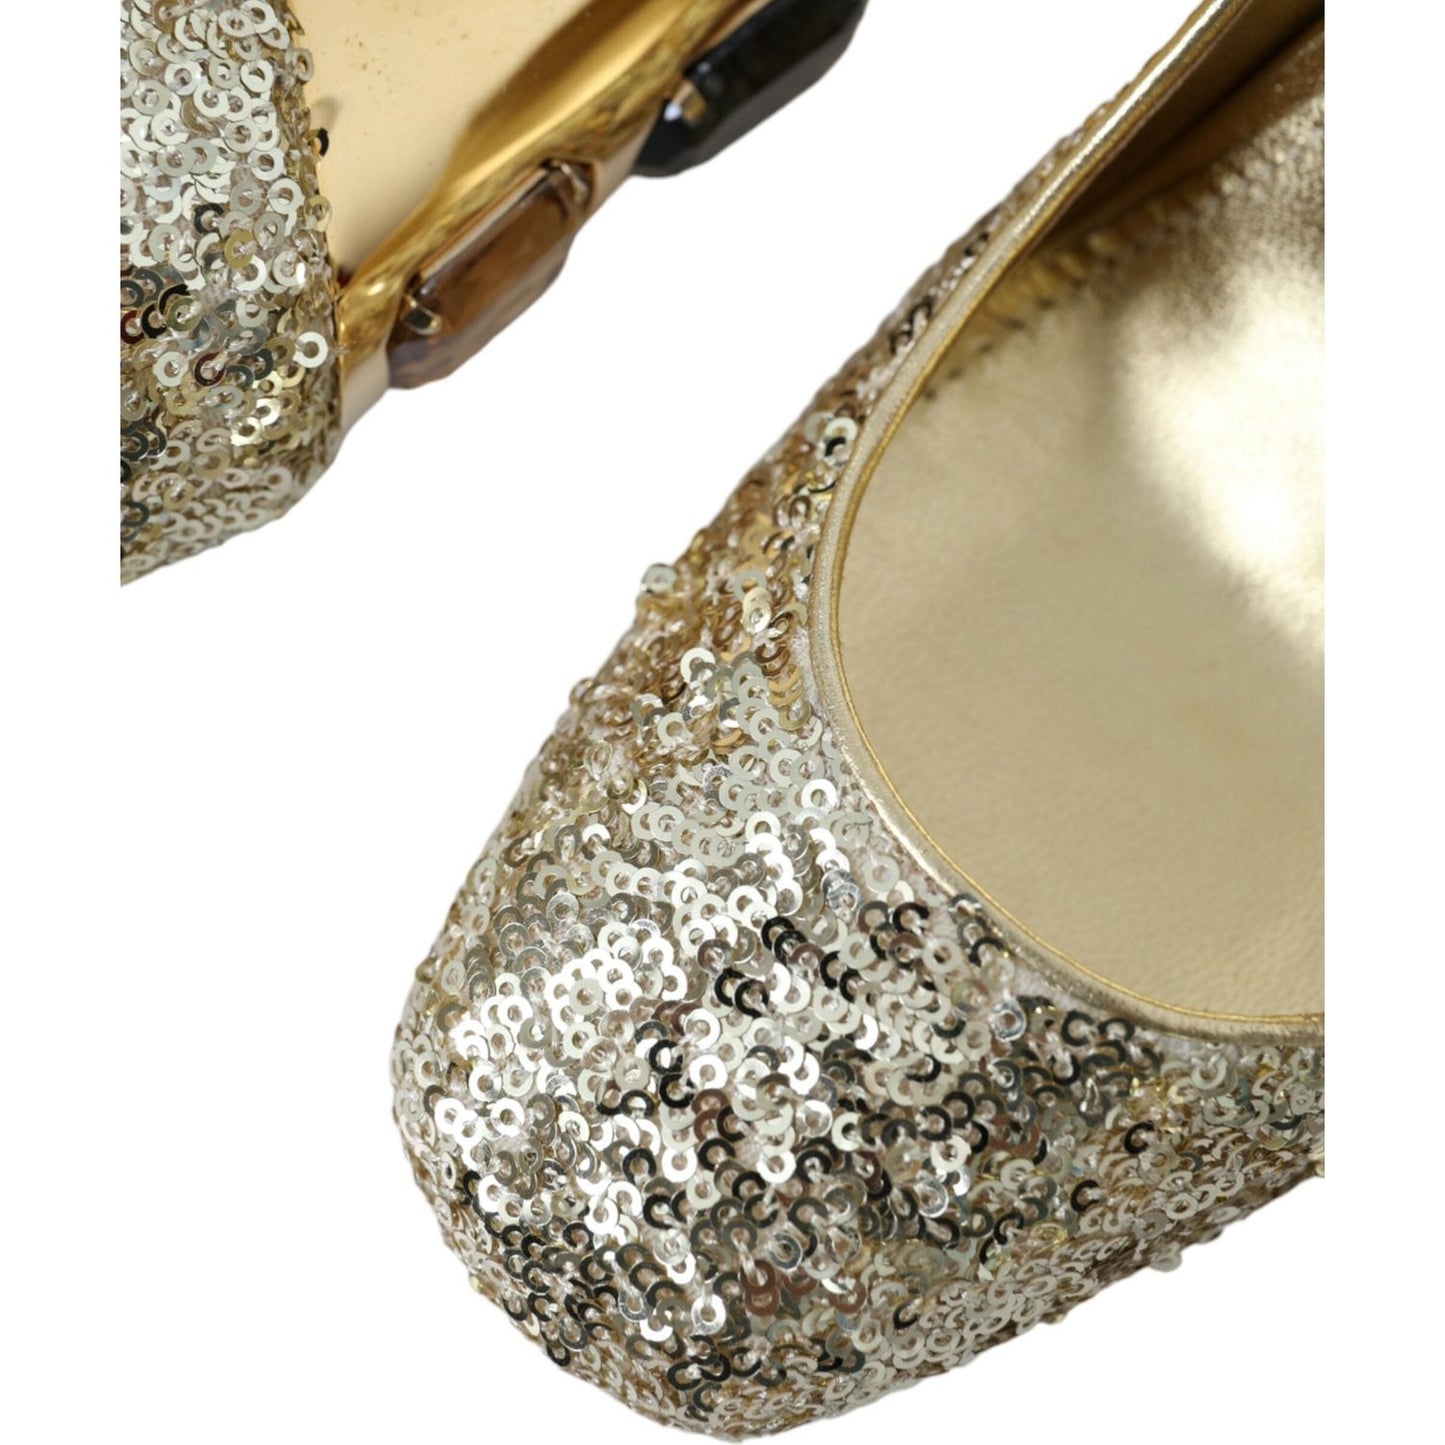 Dolce & Gabbana Gold Sequin Crystal Heels Pumps Shoes gold-sequin-crystal-heels-pumps-shoes